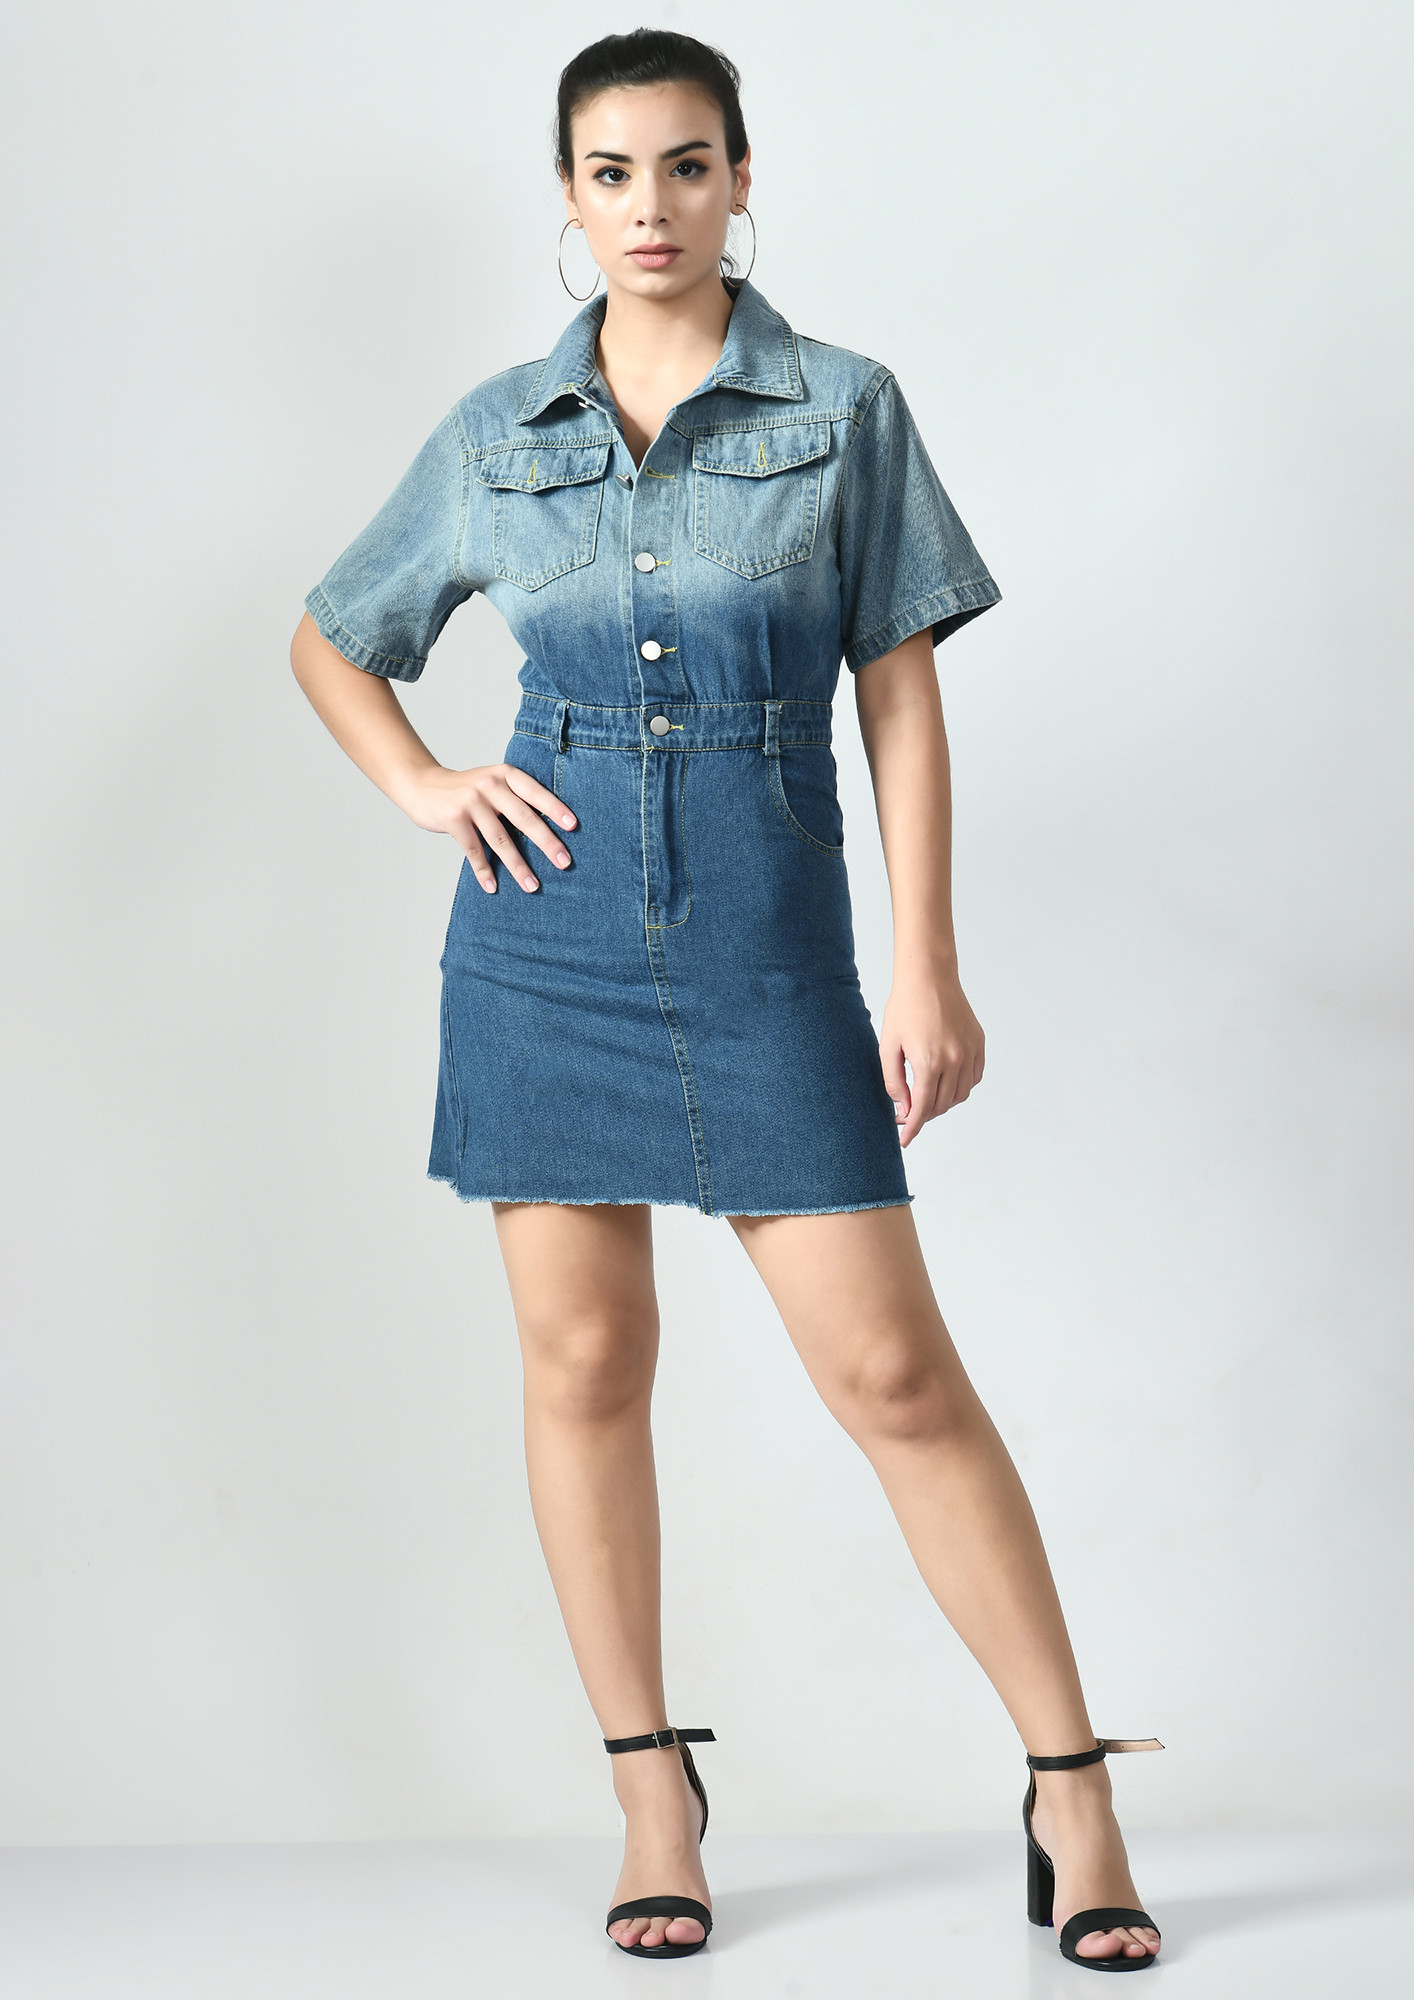 Buy Blue Shirt Dress With Ruffled Hem Online - RK India Store View